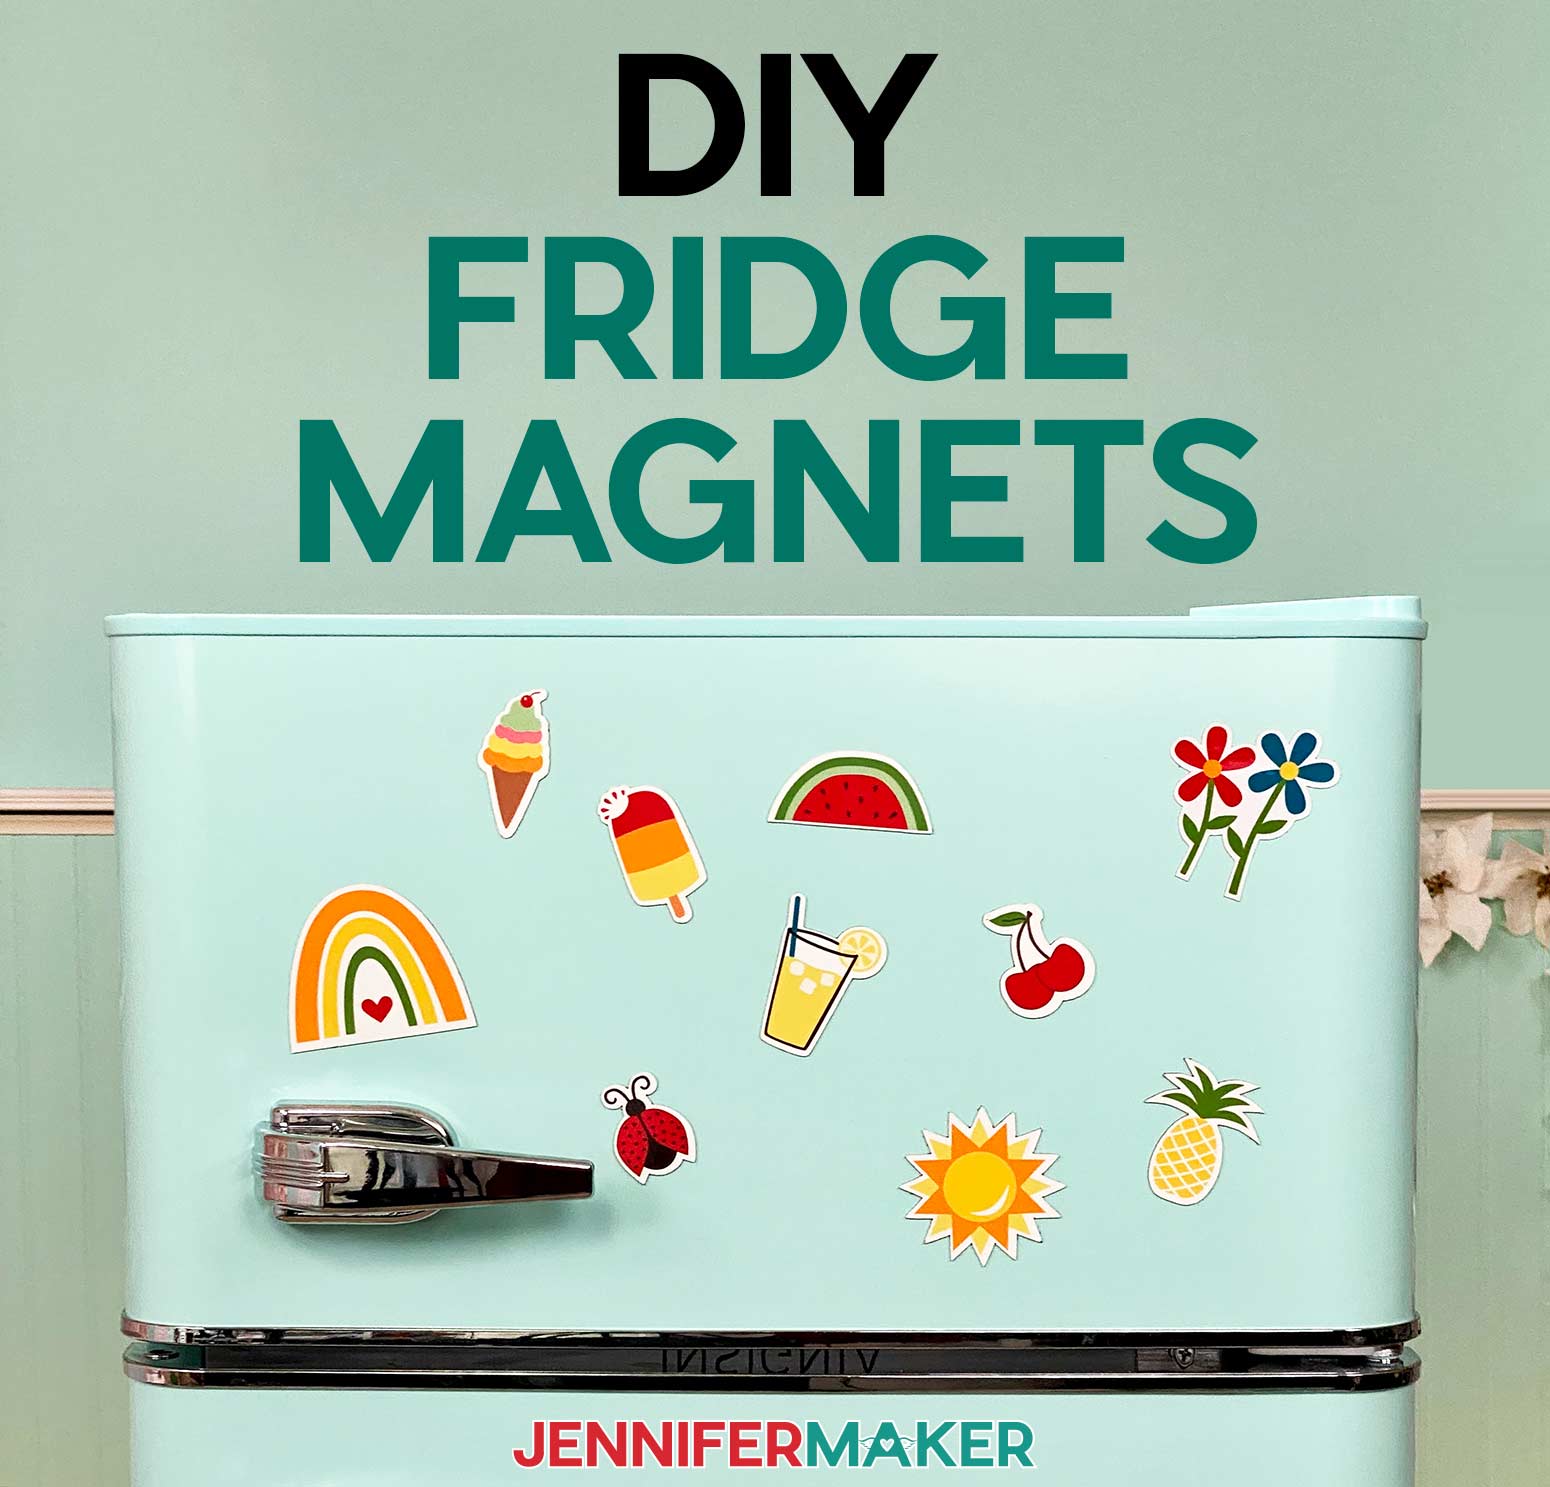 DIY Fridge Magnets With Cricut + Free Designs!